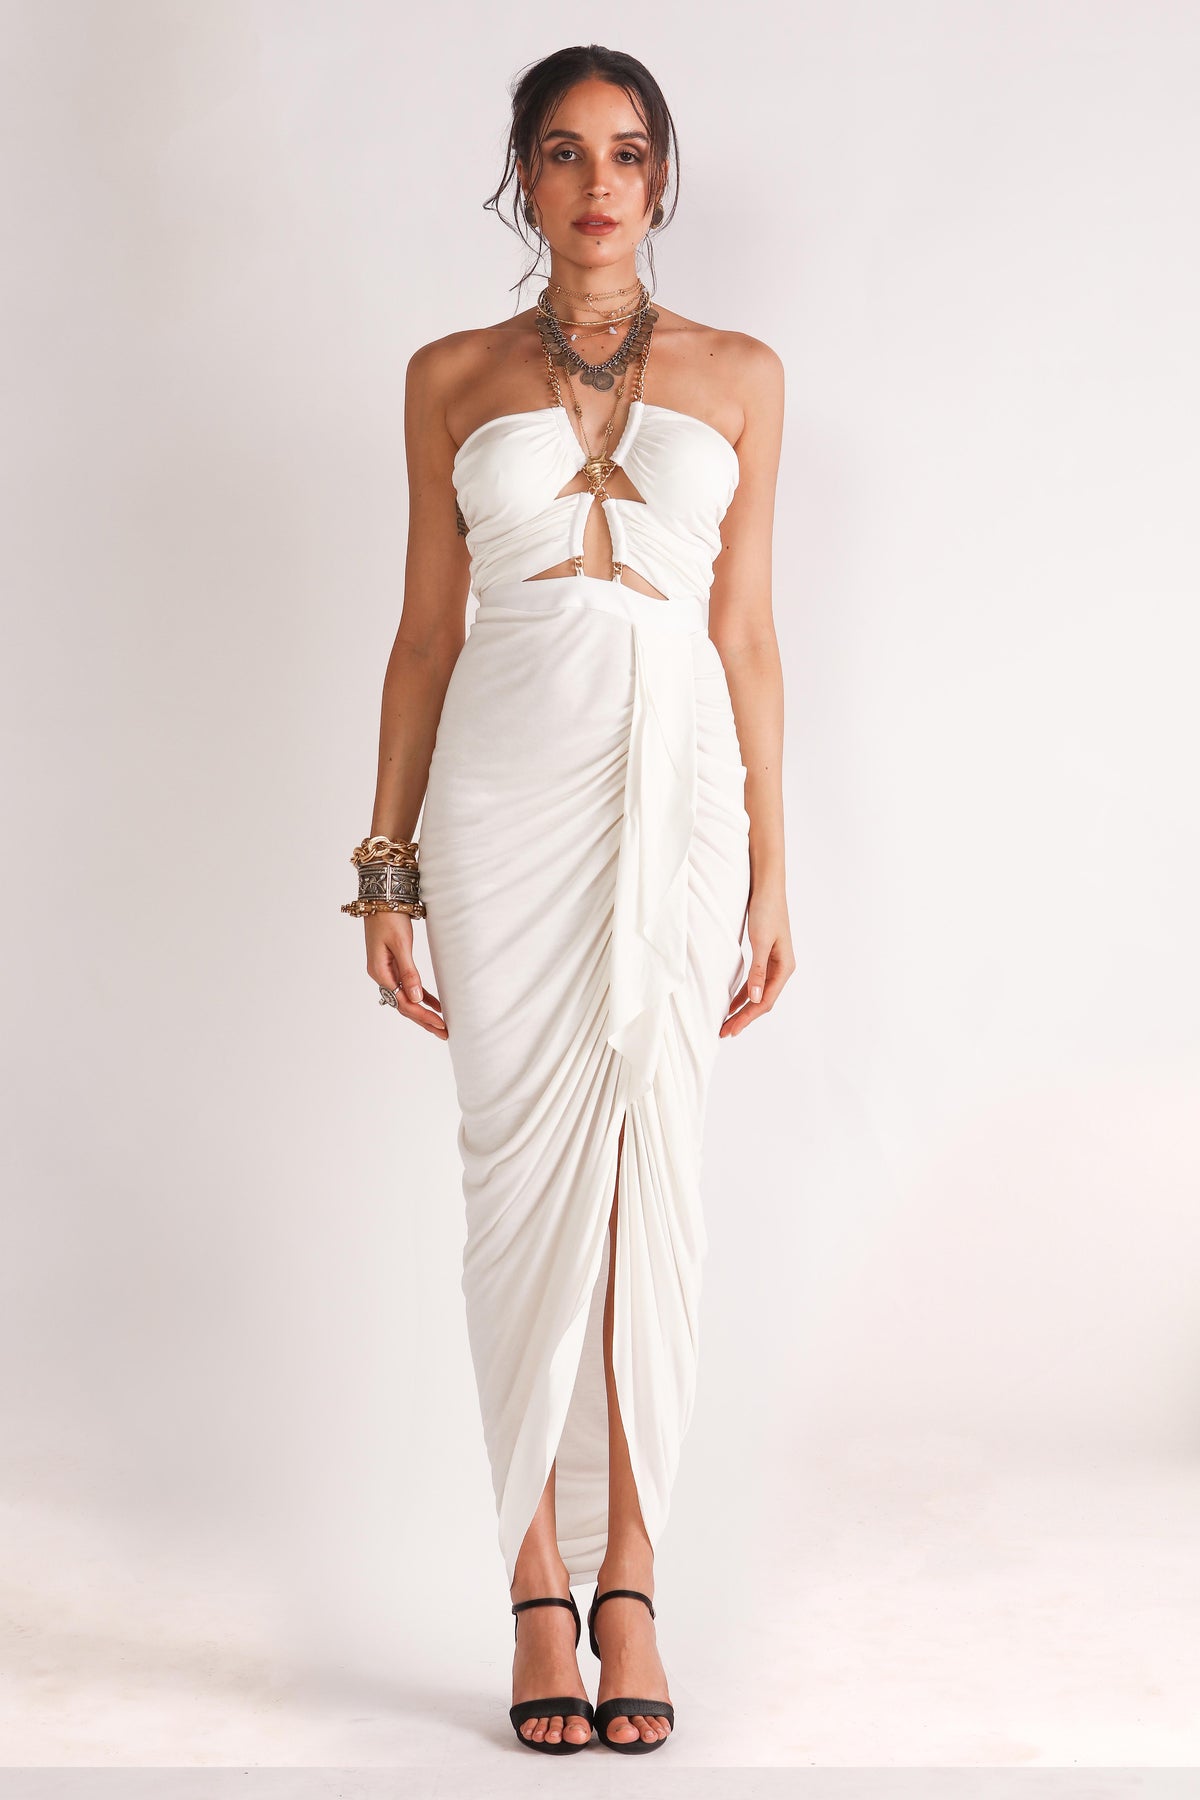 Titatnia Jersey Goddess Draped Dress